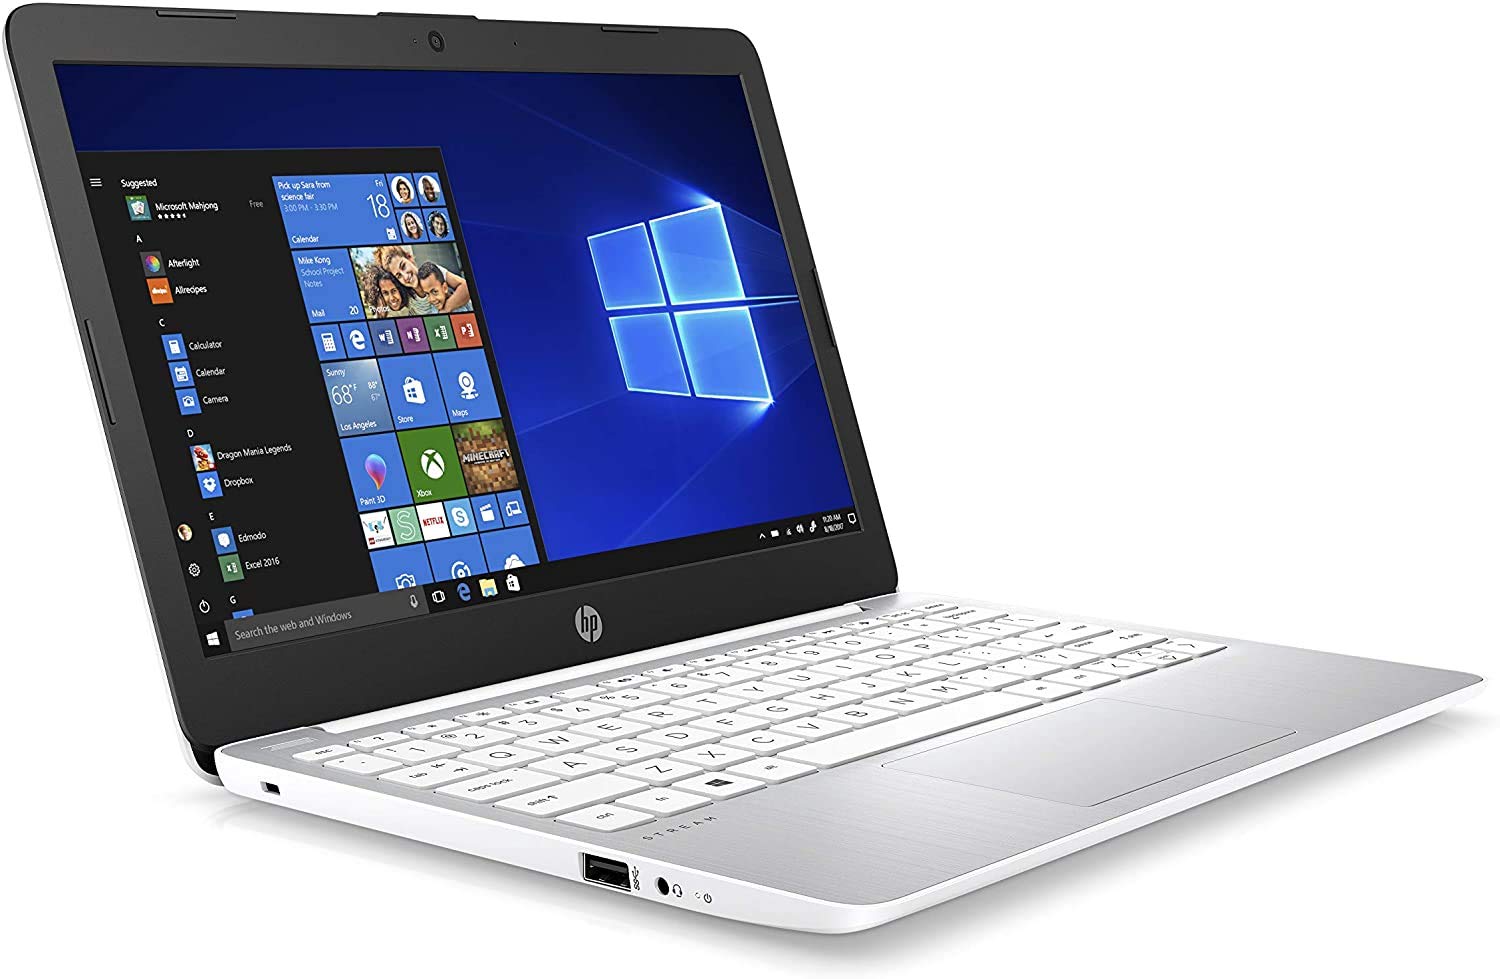 2022 HP Stream 11.6 inch Laptop Computer Intel Celeron N4020 upto 2.8 GHz, 4GB RAM, 32GB eMMC Storage, Windows 10 Home, 13Hr Battery Life, Office 365 1Year, (Diamond White) Plus Vgsion Bundle Software